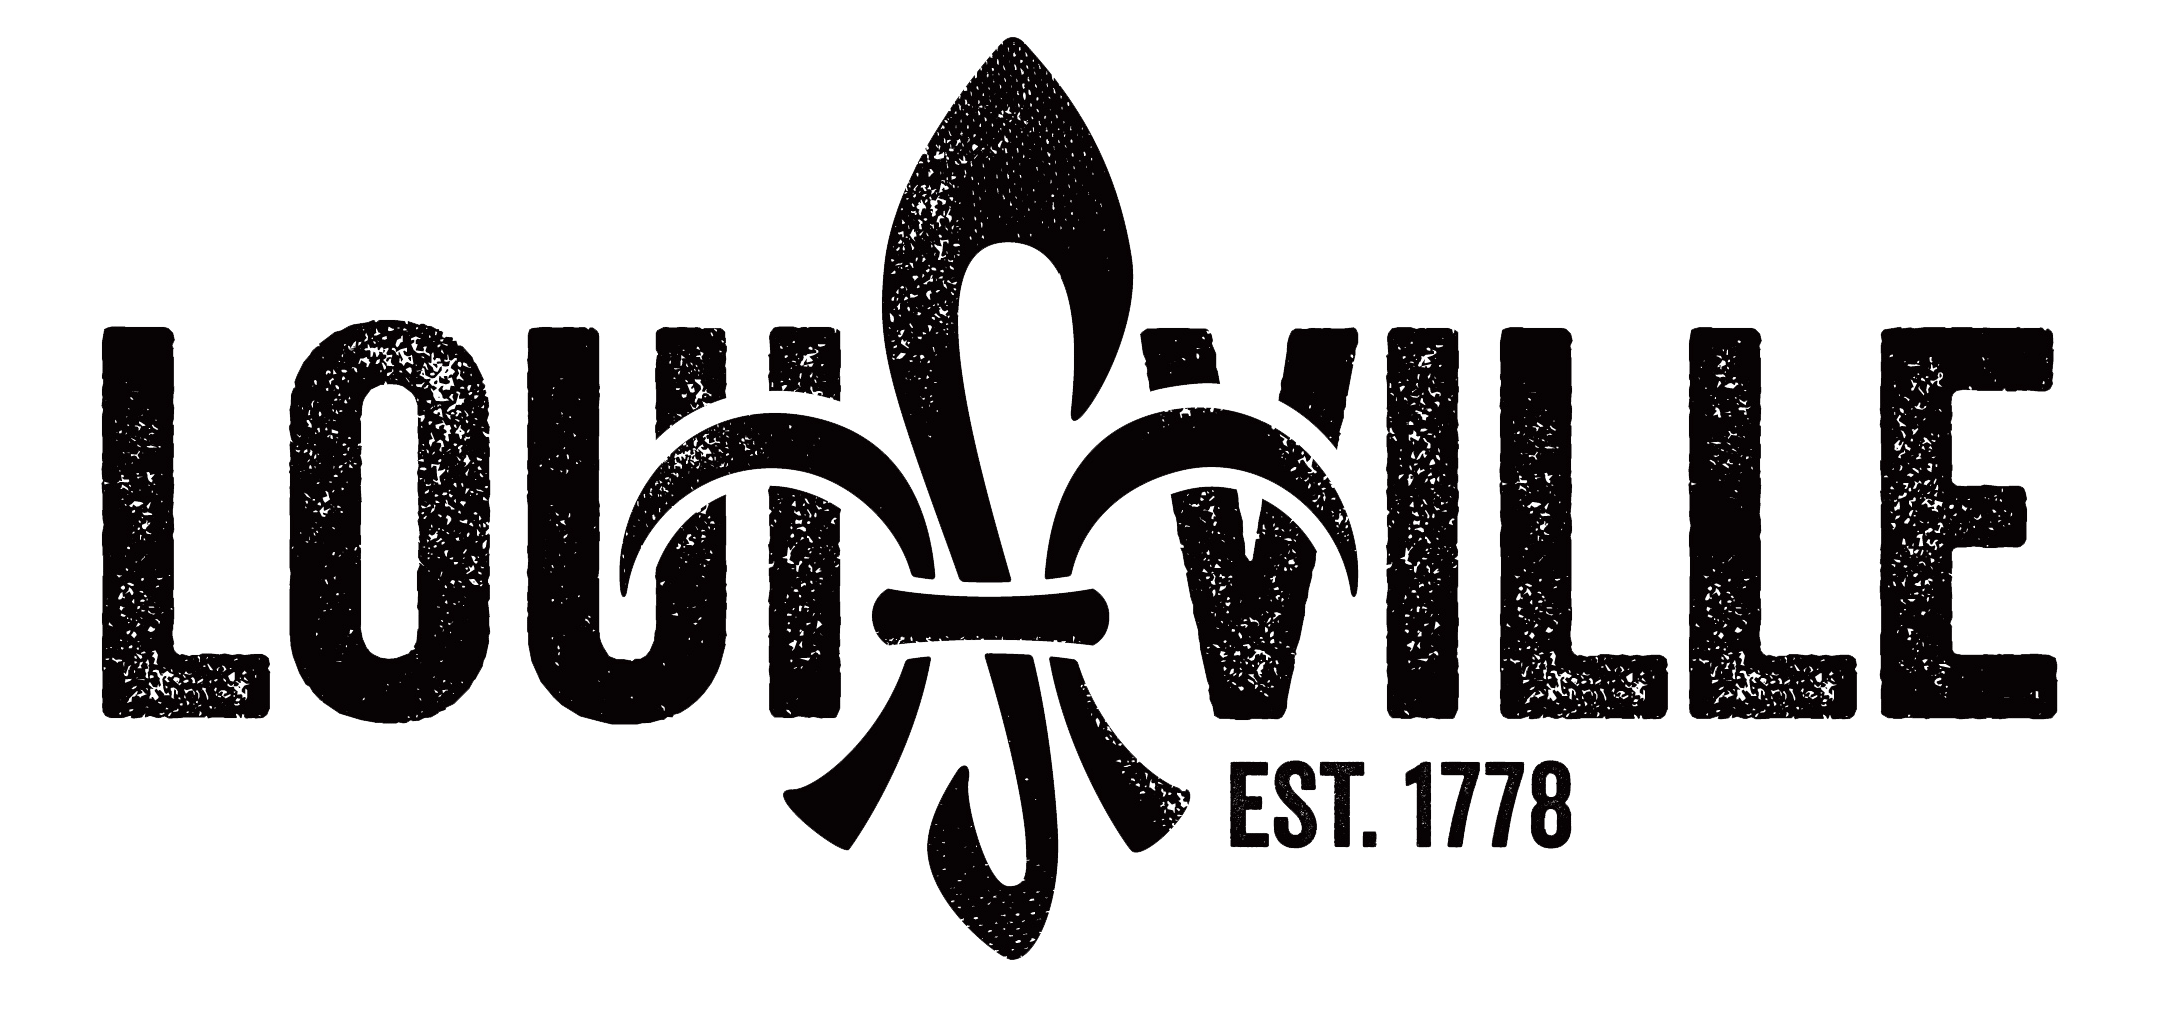 Louisville Logo - Louisville Zoo